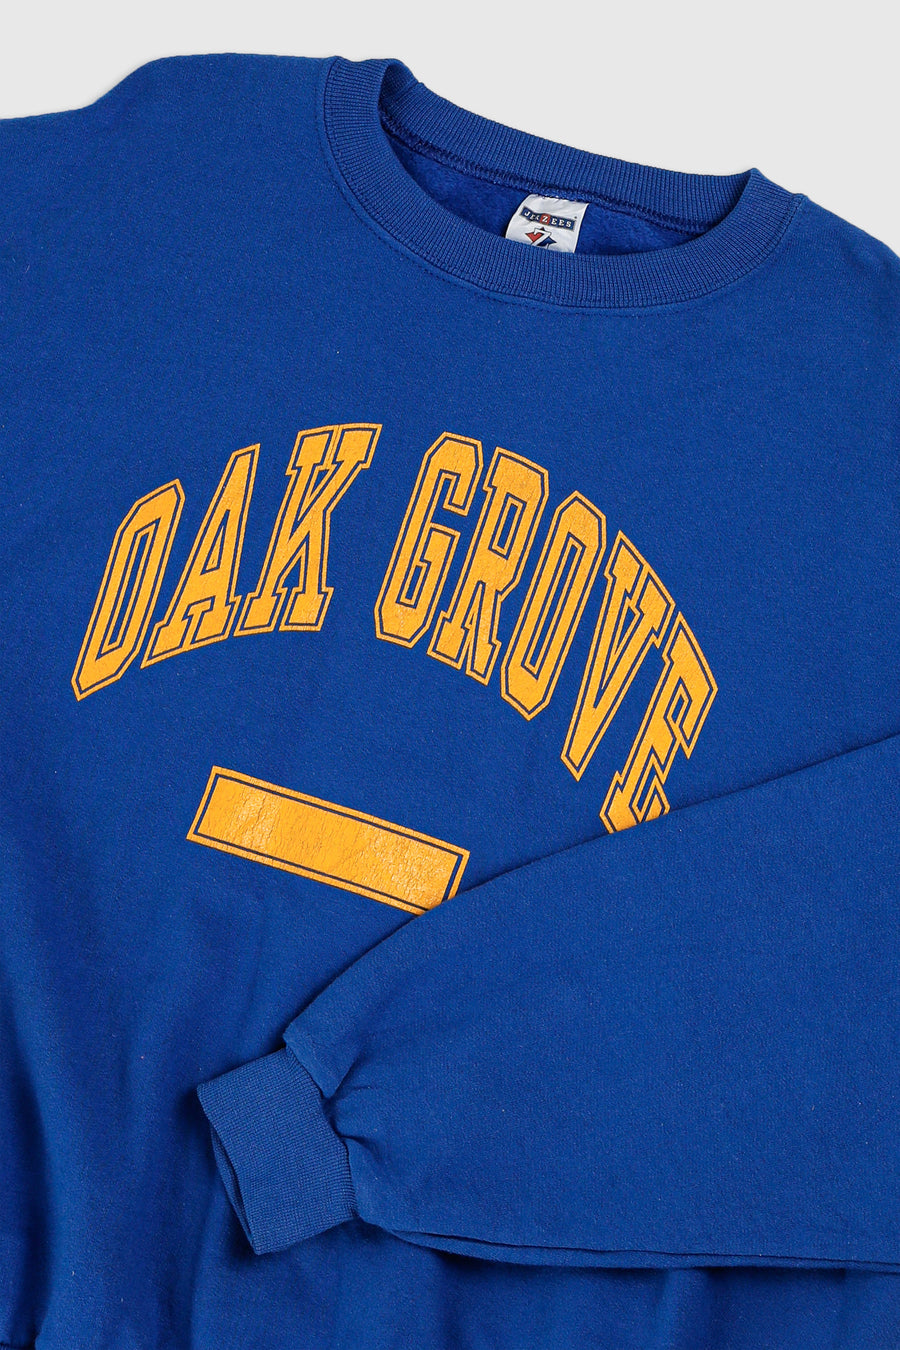 Vintage Oak Grove Sweatshirt - XL